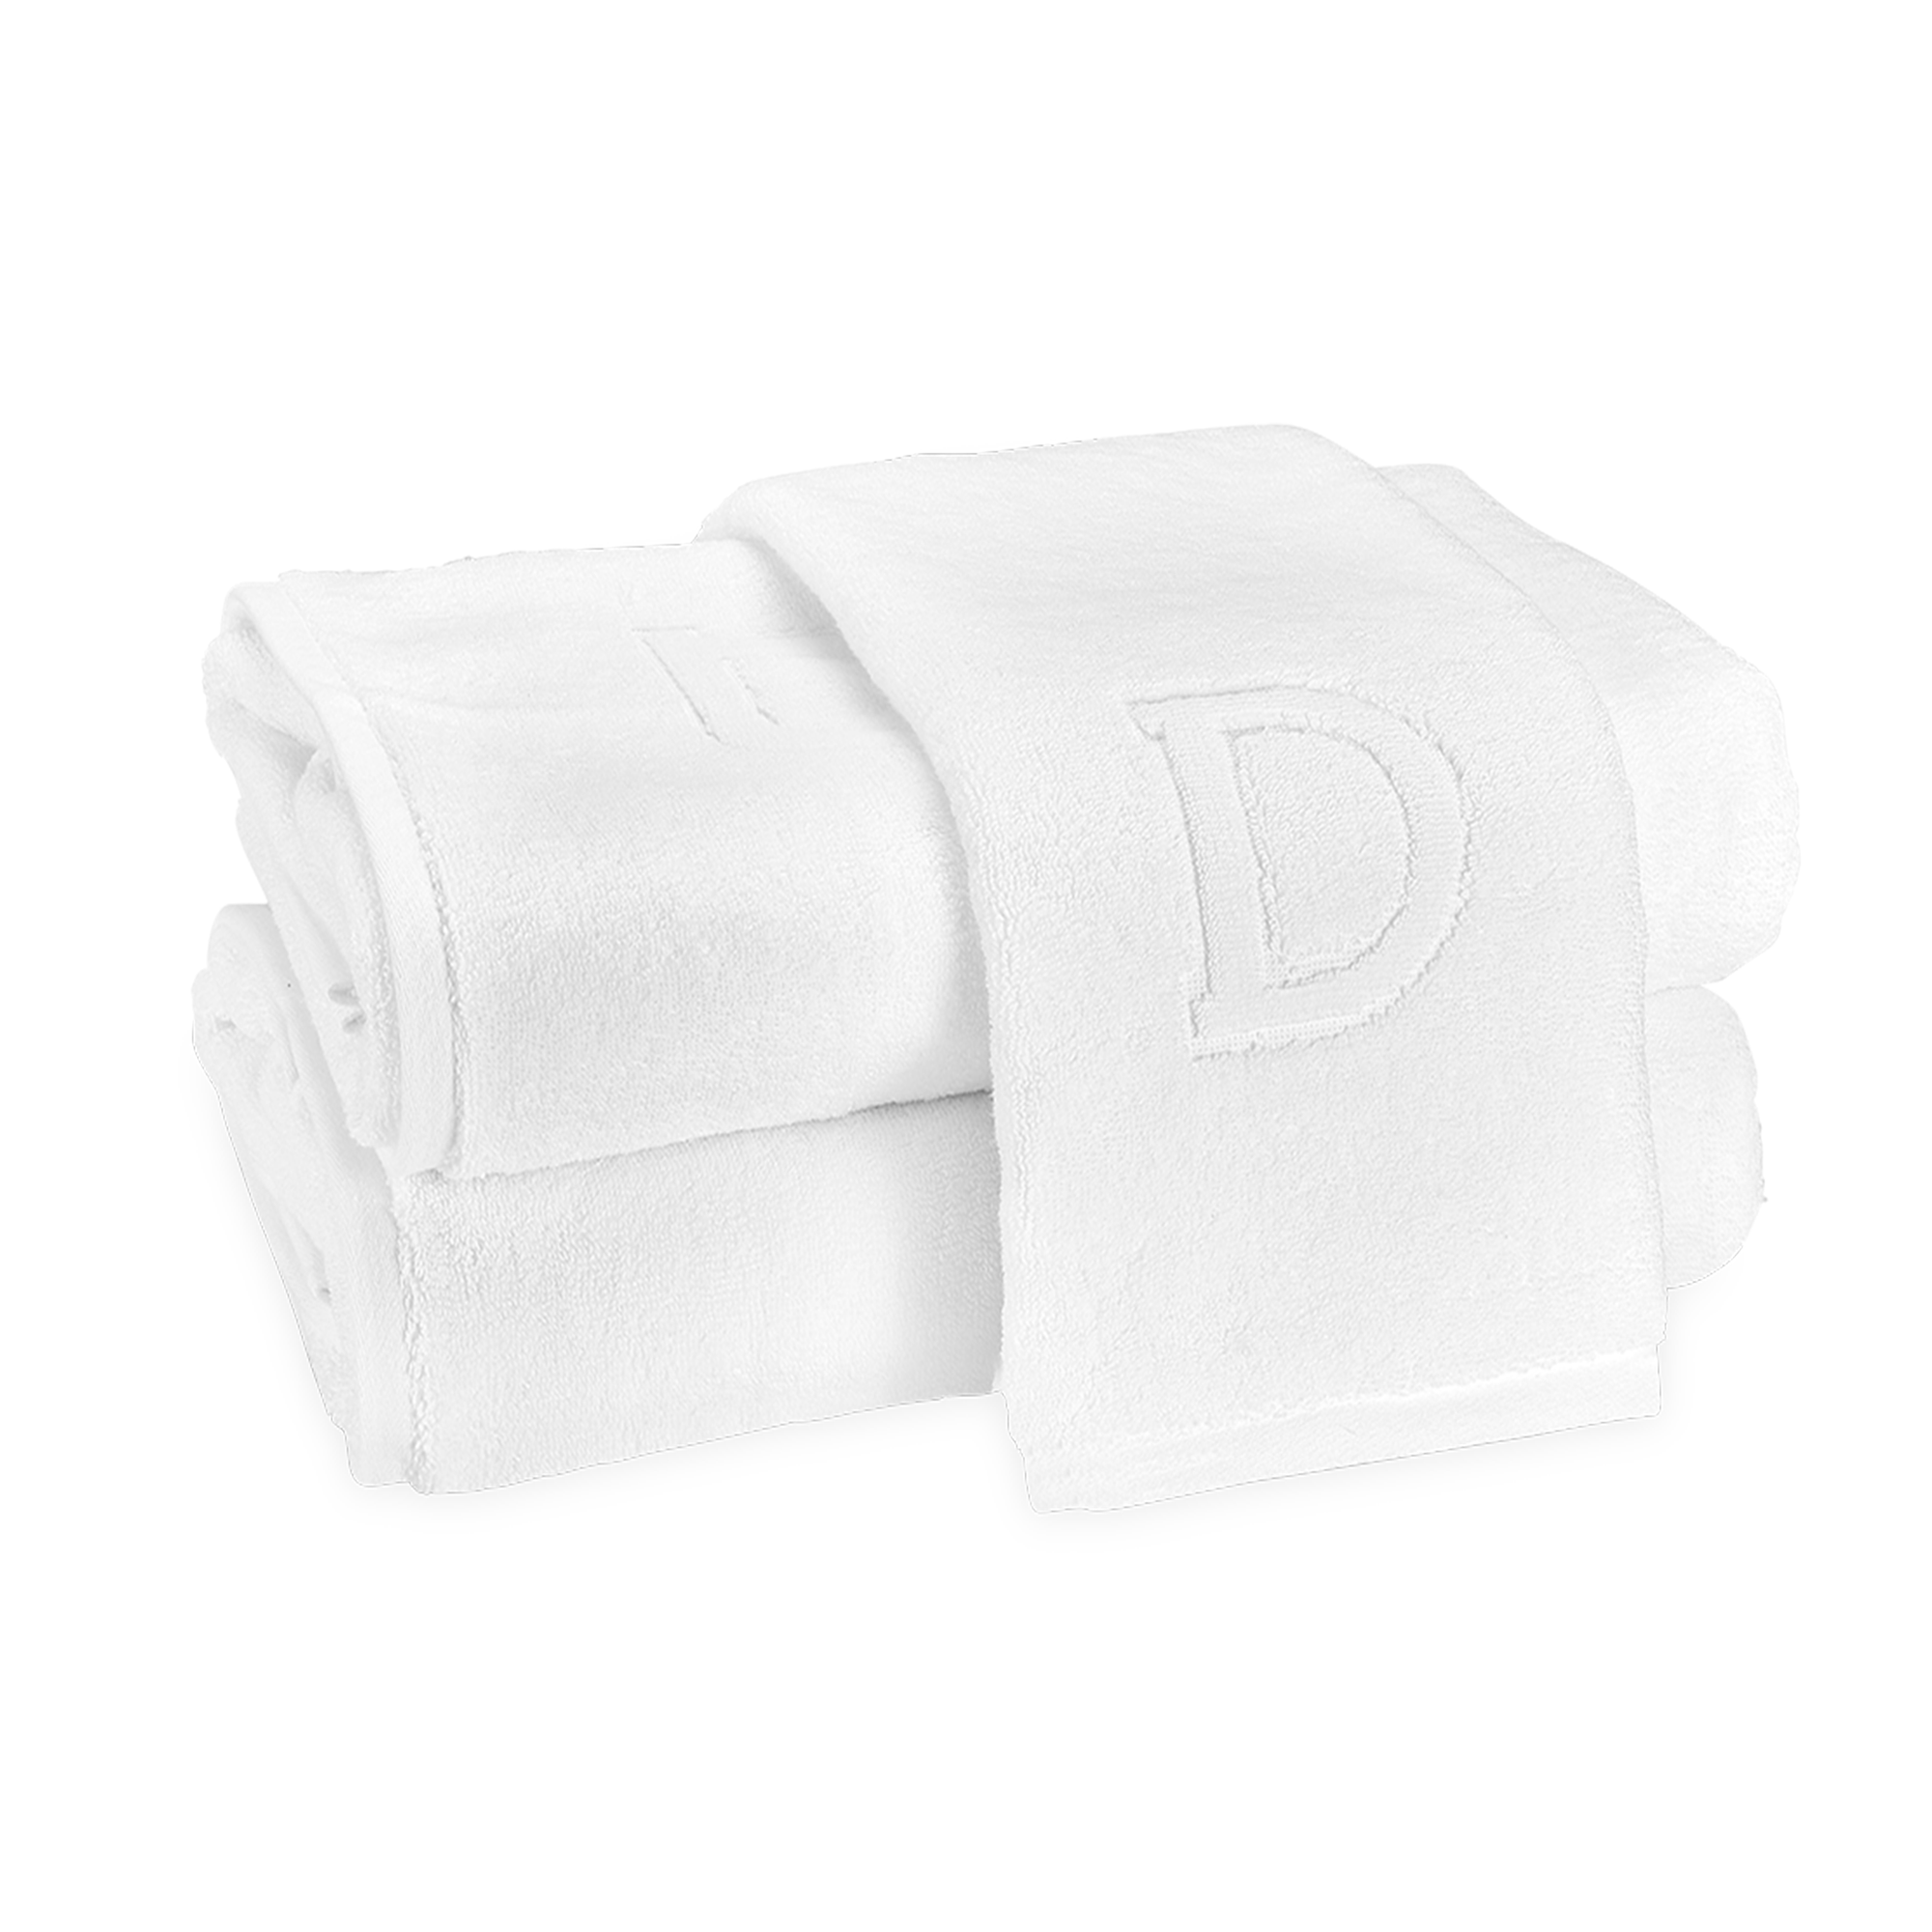 Swatch Sample of Letter D Matouk Auberge Bath Towels